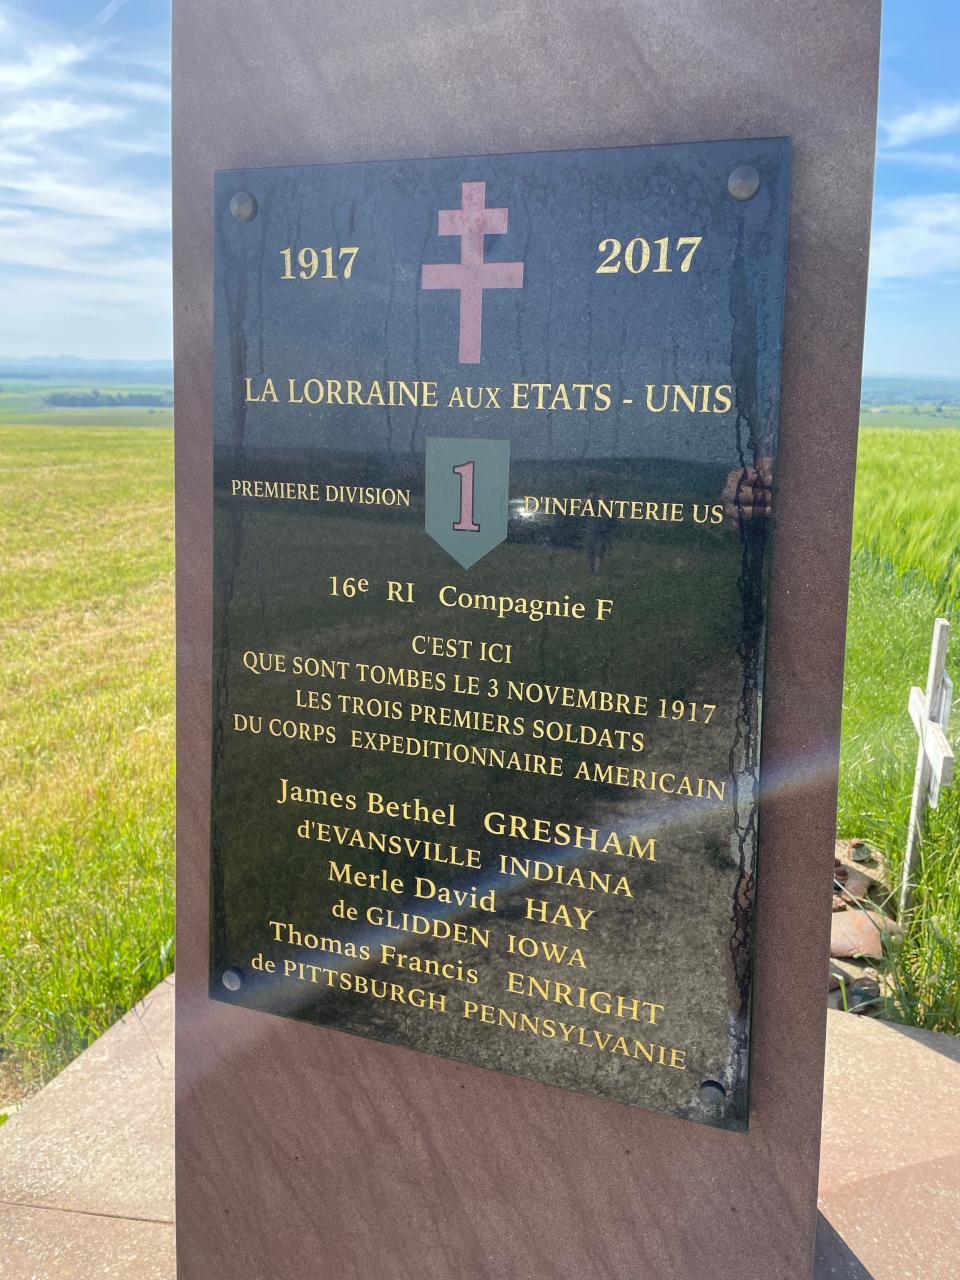 The historical marker on the Bathelemont World War I Memorial in France.